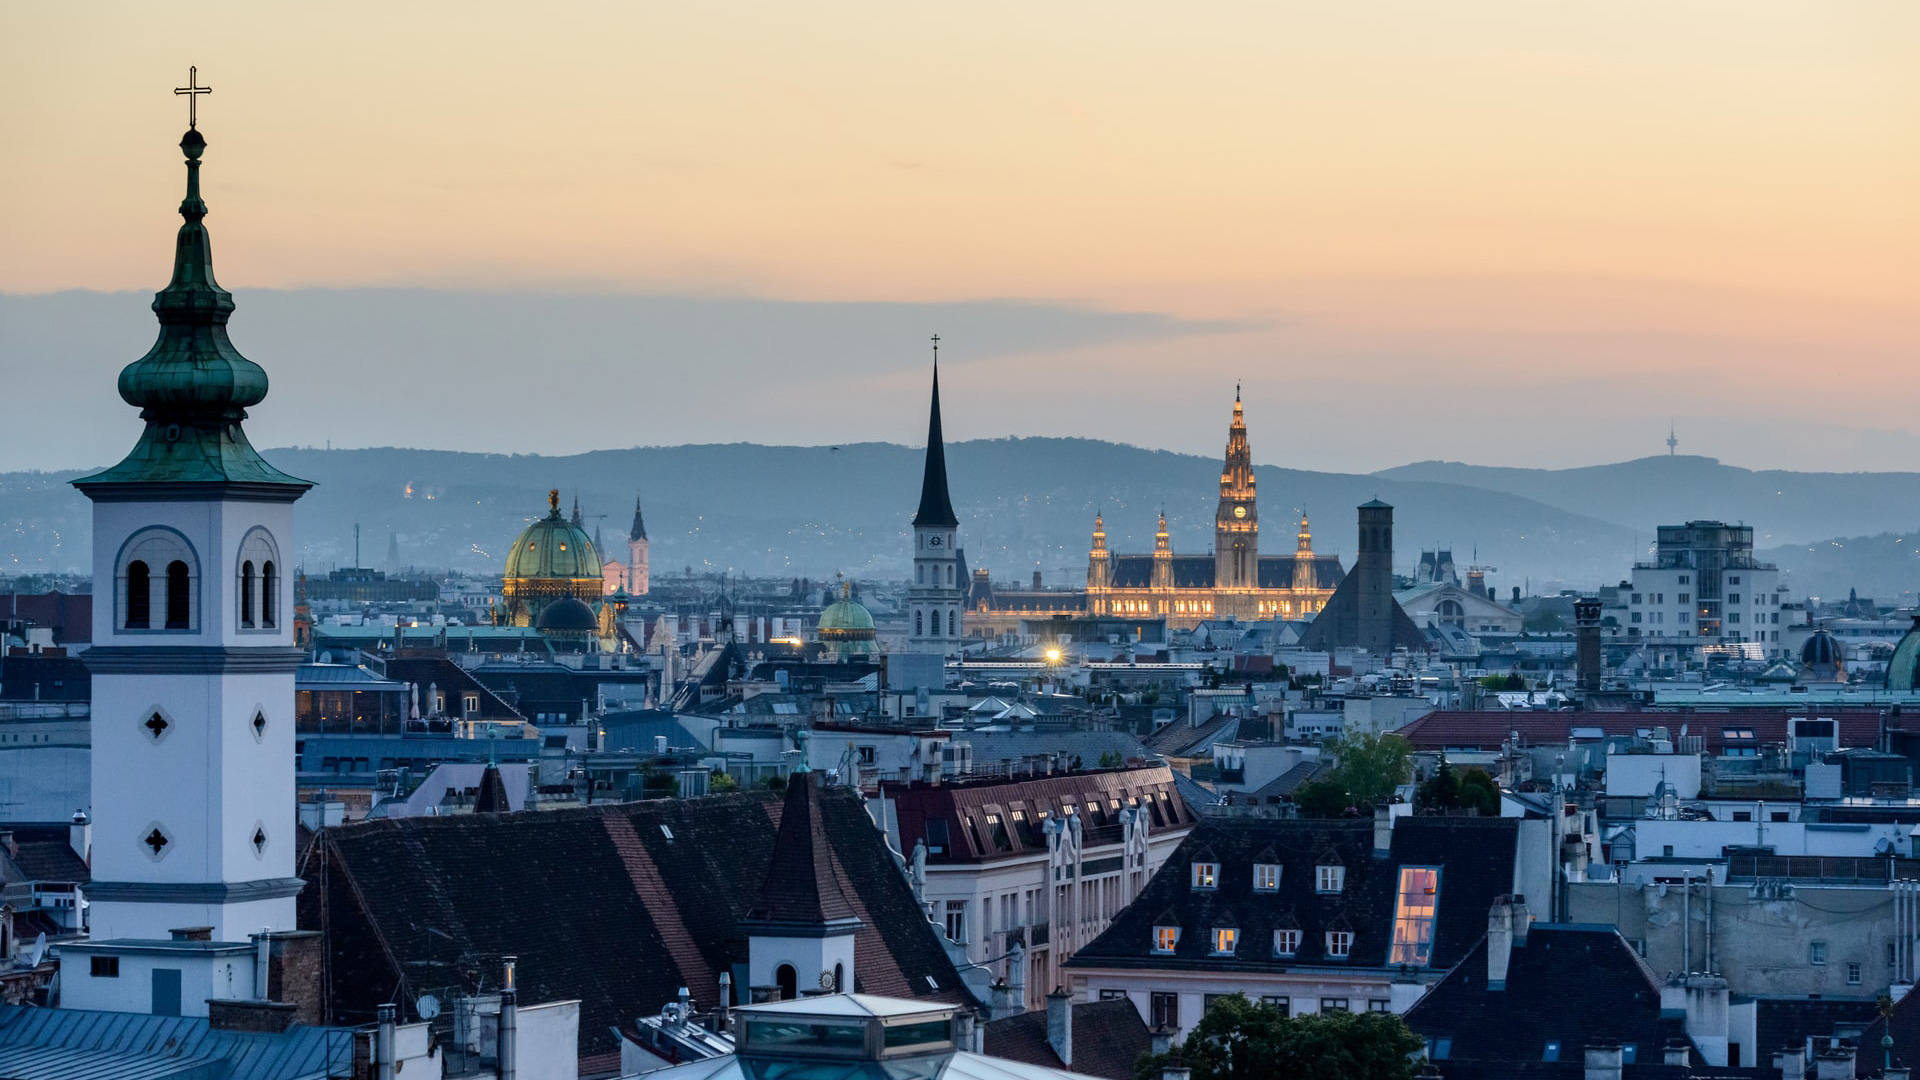 Vienna, Austria skyline image by Jacek Dylag via Unsplash